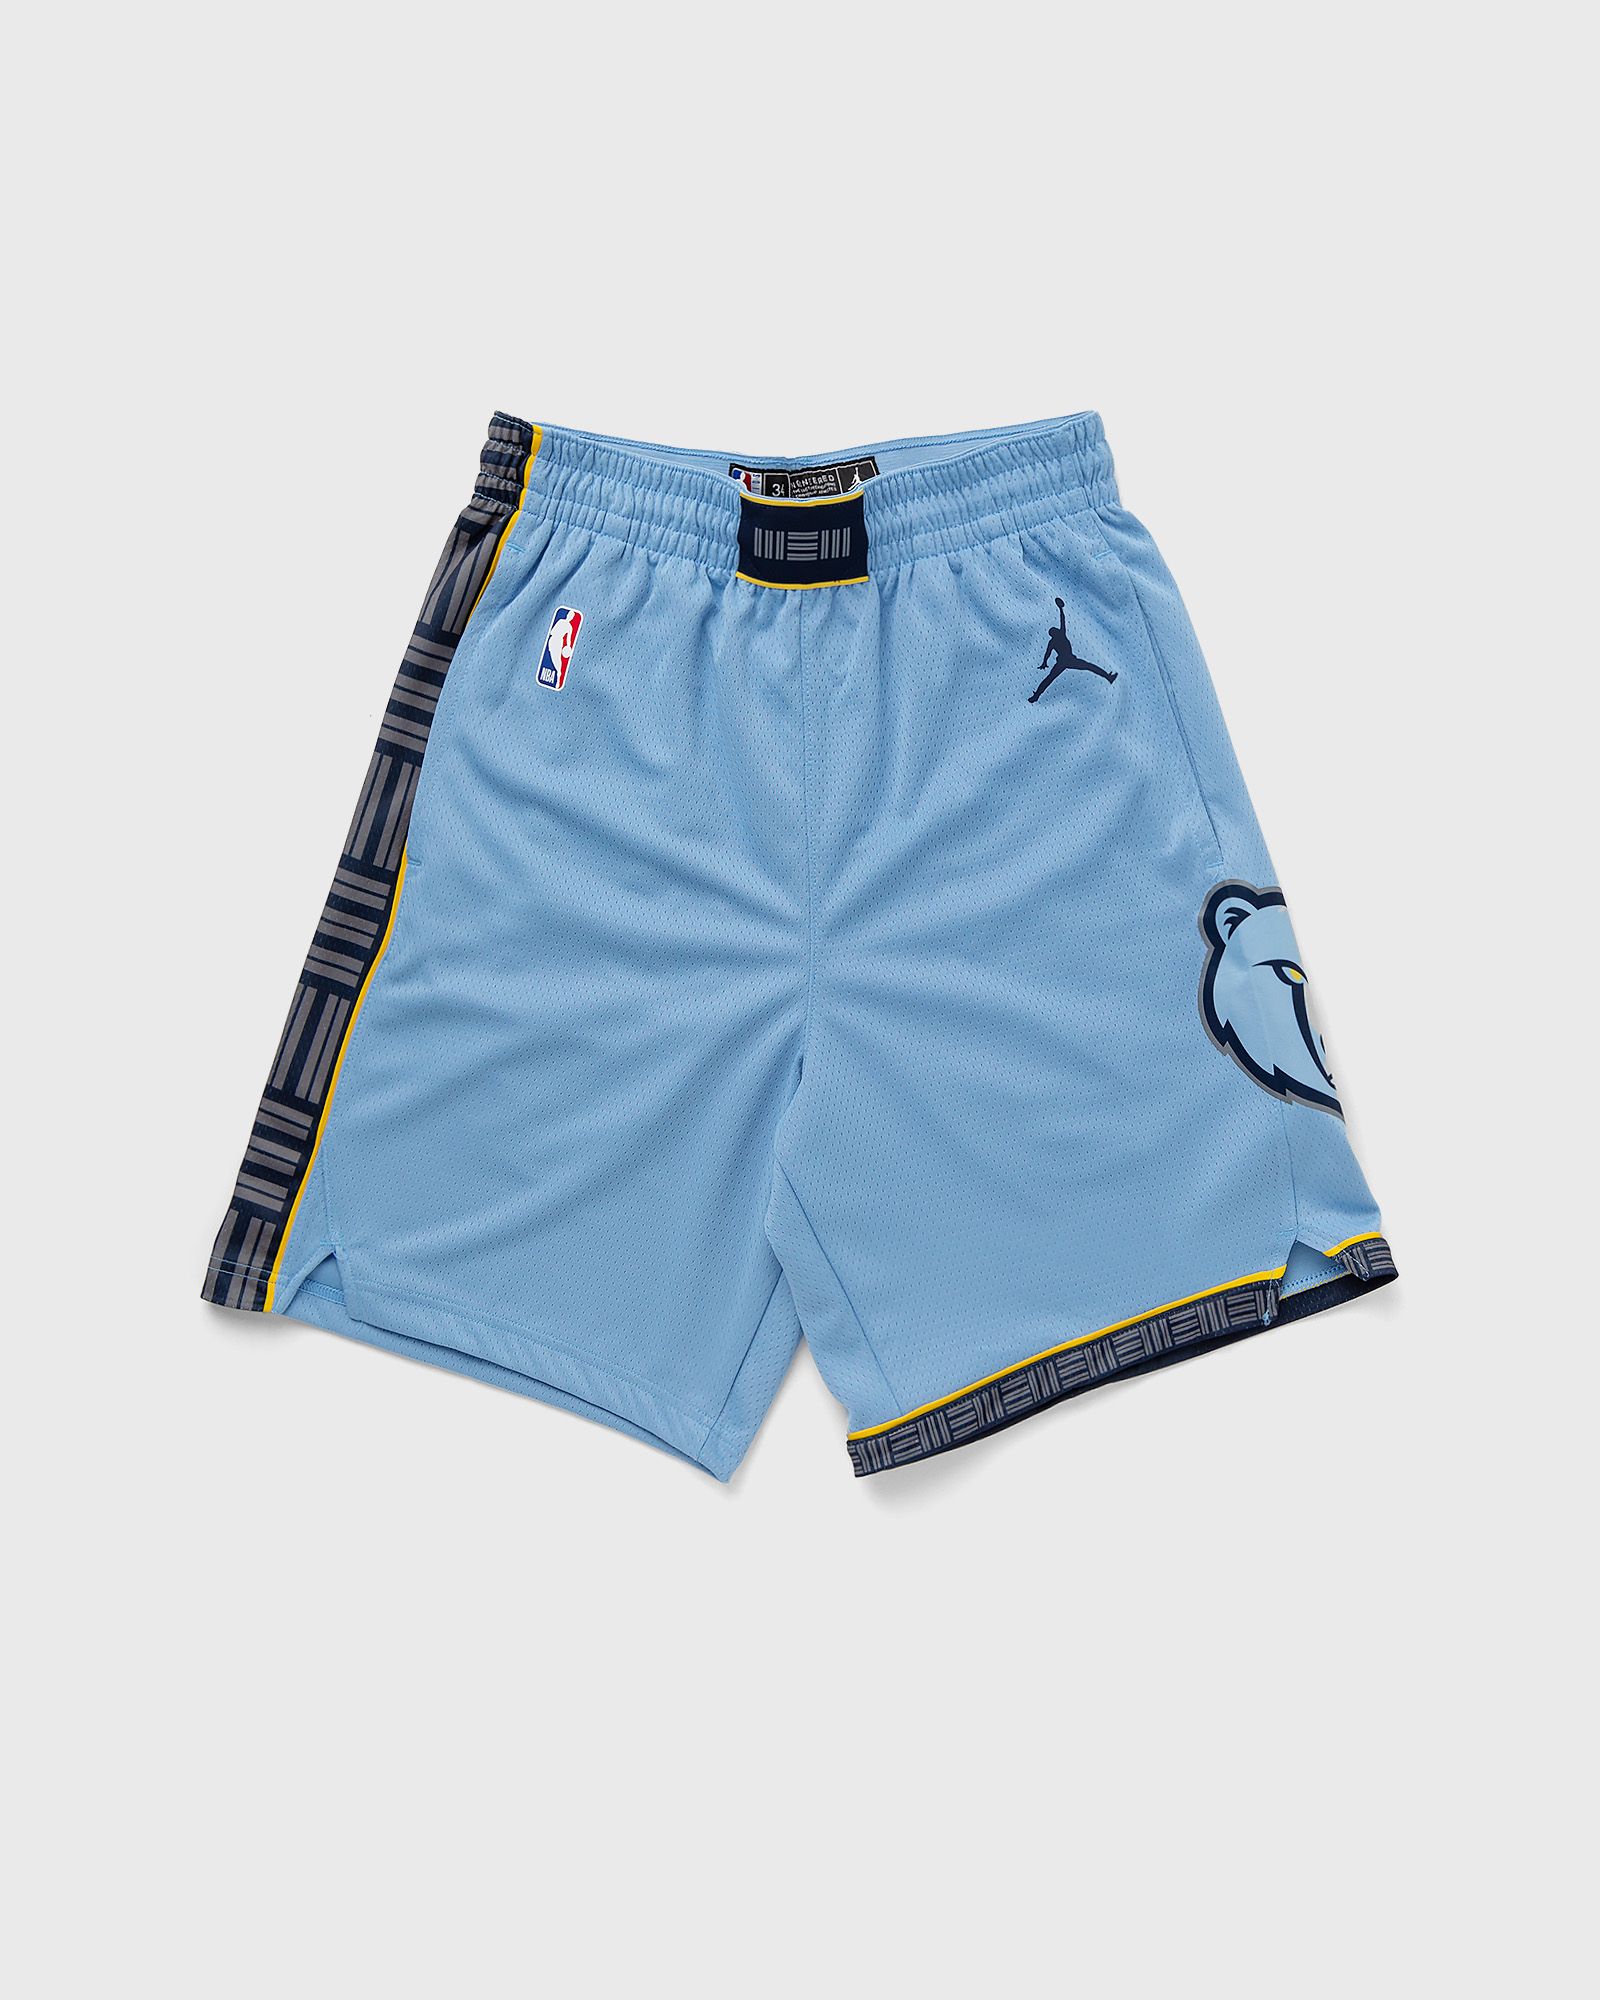 Nike - memphis grizzlies statement edition men's jordan dri-fit nba swingman basketball shorts men sport & team shorts blue in größe:xxl